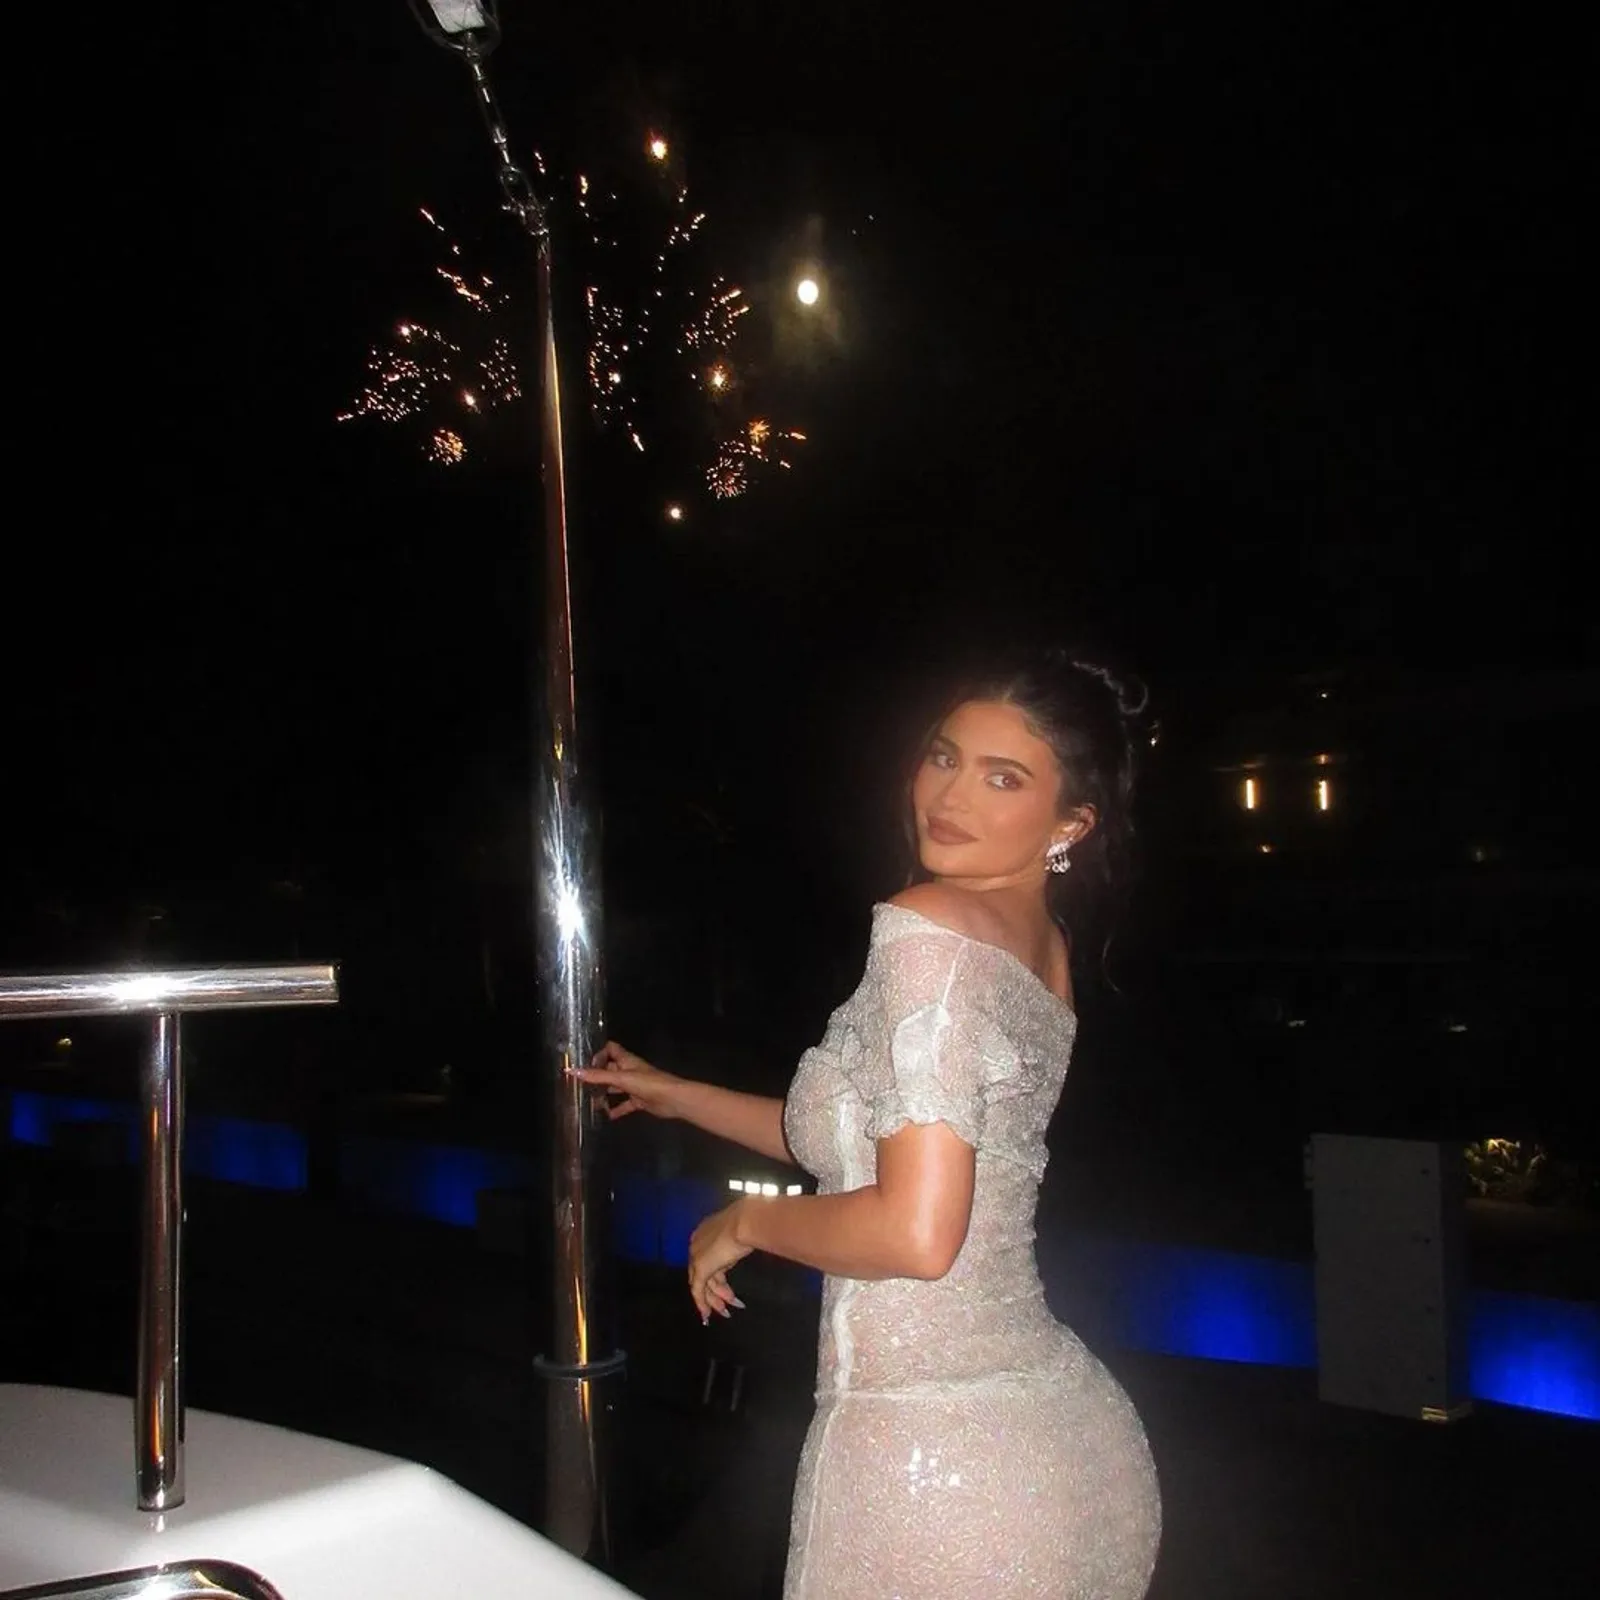 Potret Kylie Jenner di Pesta Ultah, Pakai Gaun Menerawang & 'Melorot'